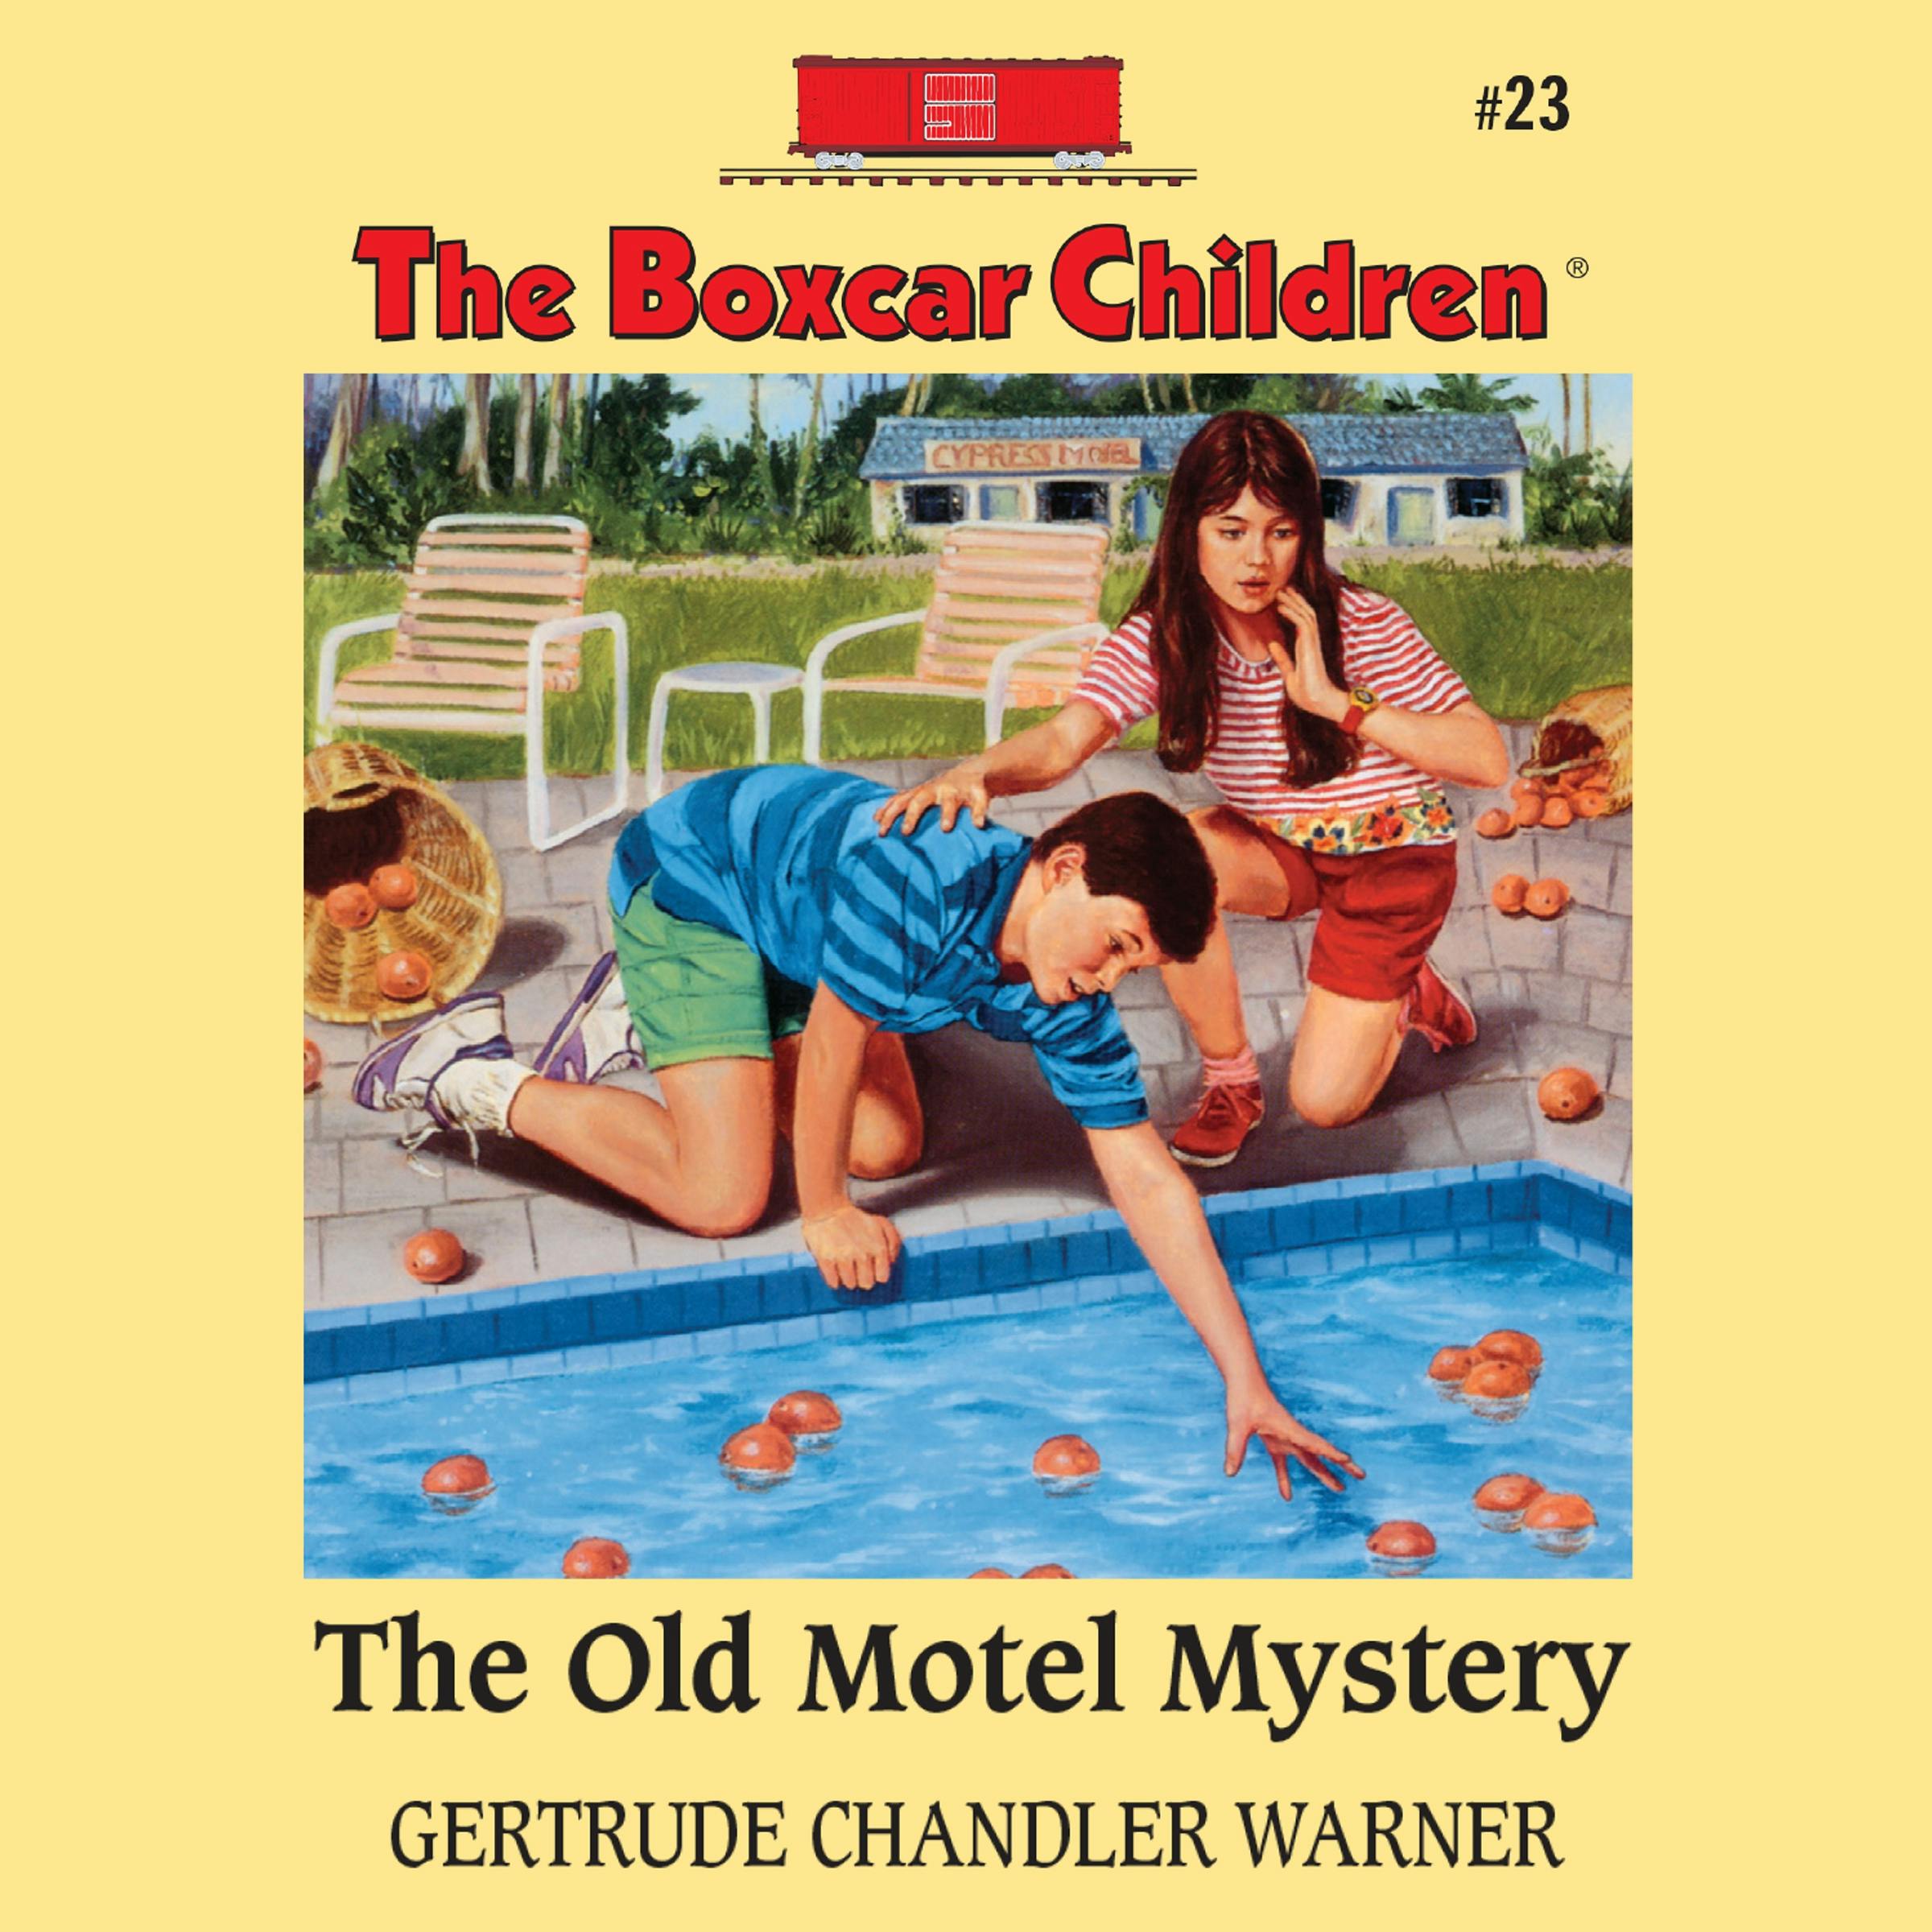 The Old Motel Mystery - Gertrude Chandler Warner